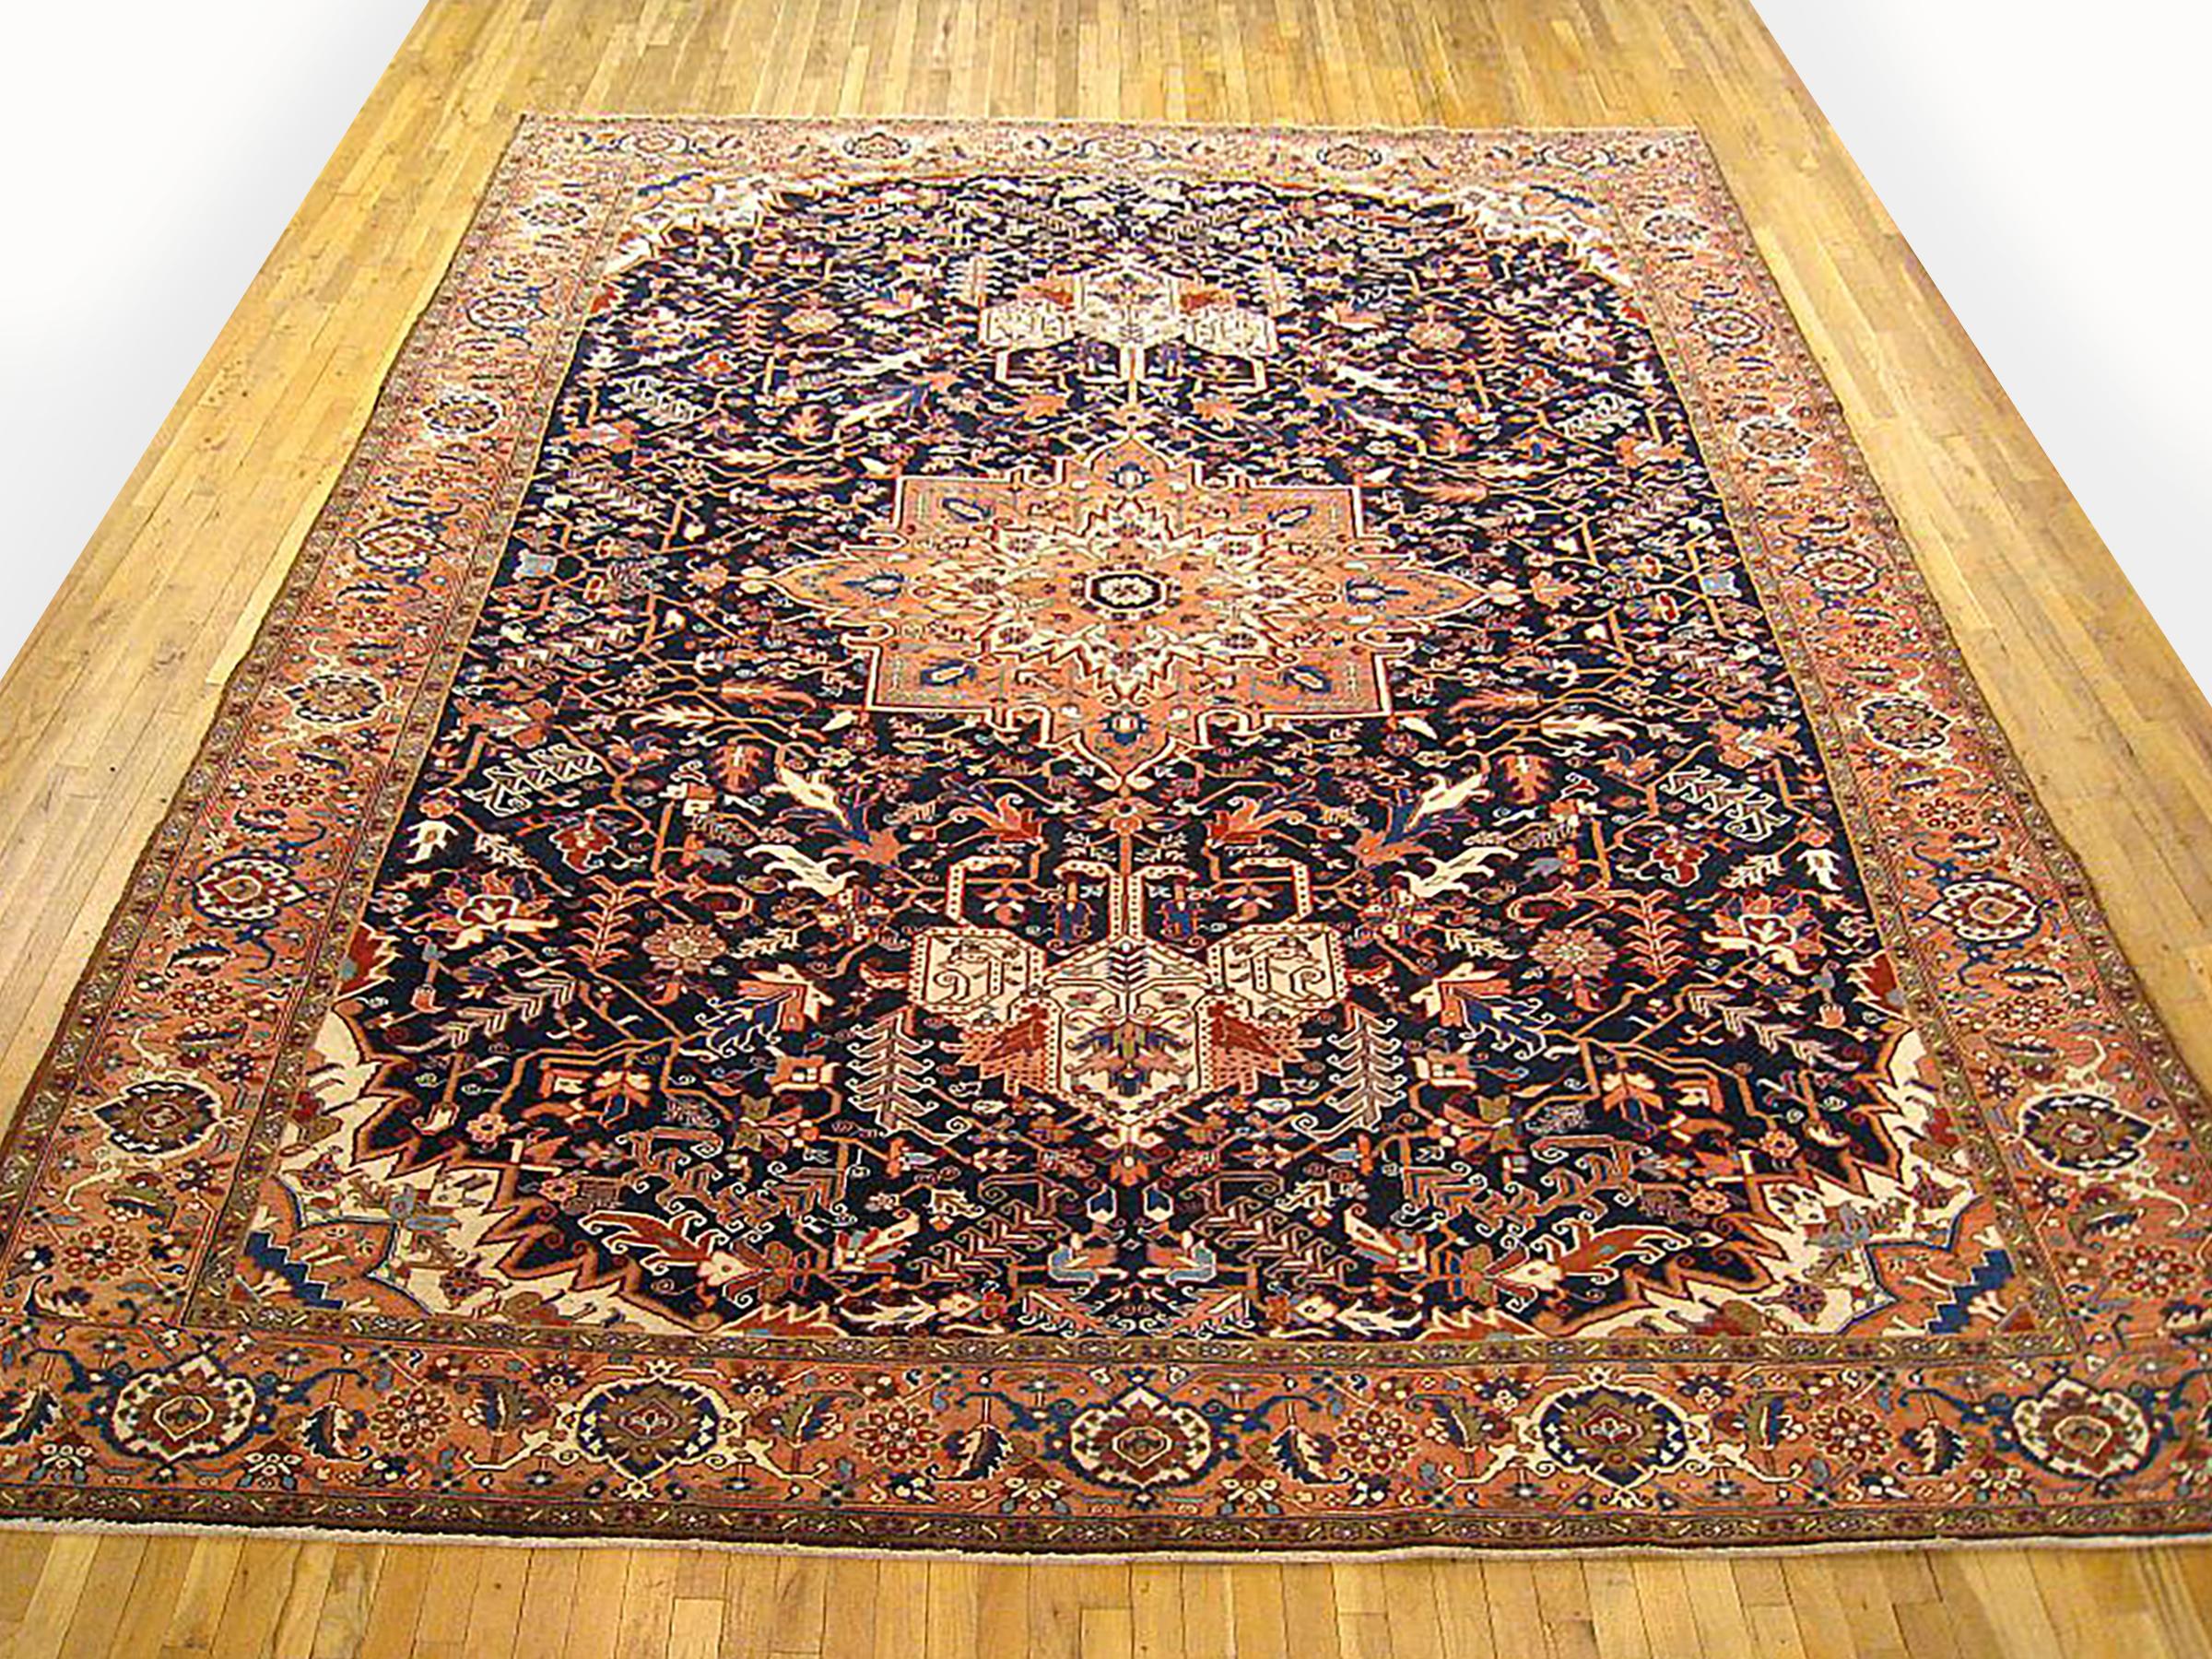 Vintage Persian Heriz oriental rug, Room size

A vintage Persian Heriz oriental rug, size 13'6